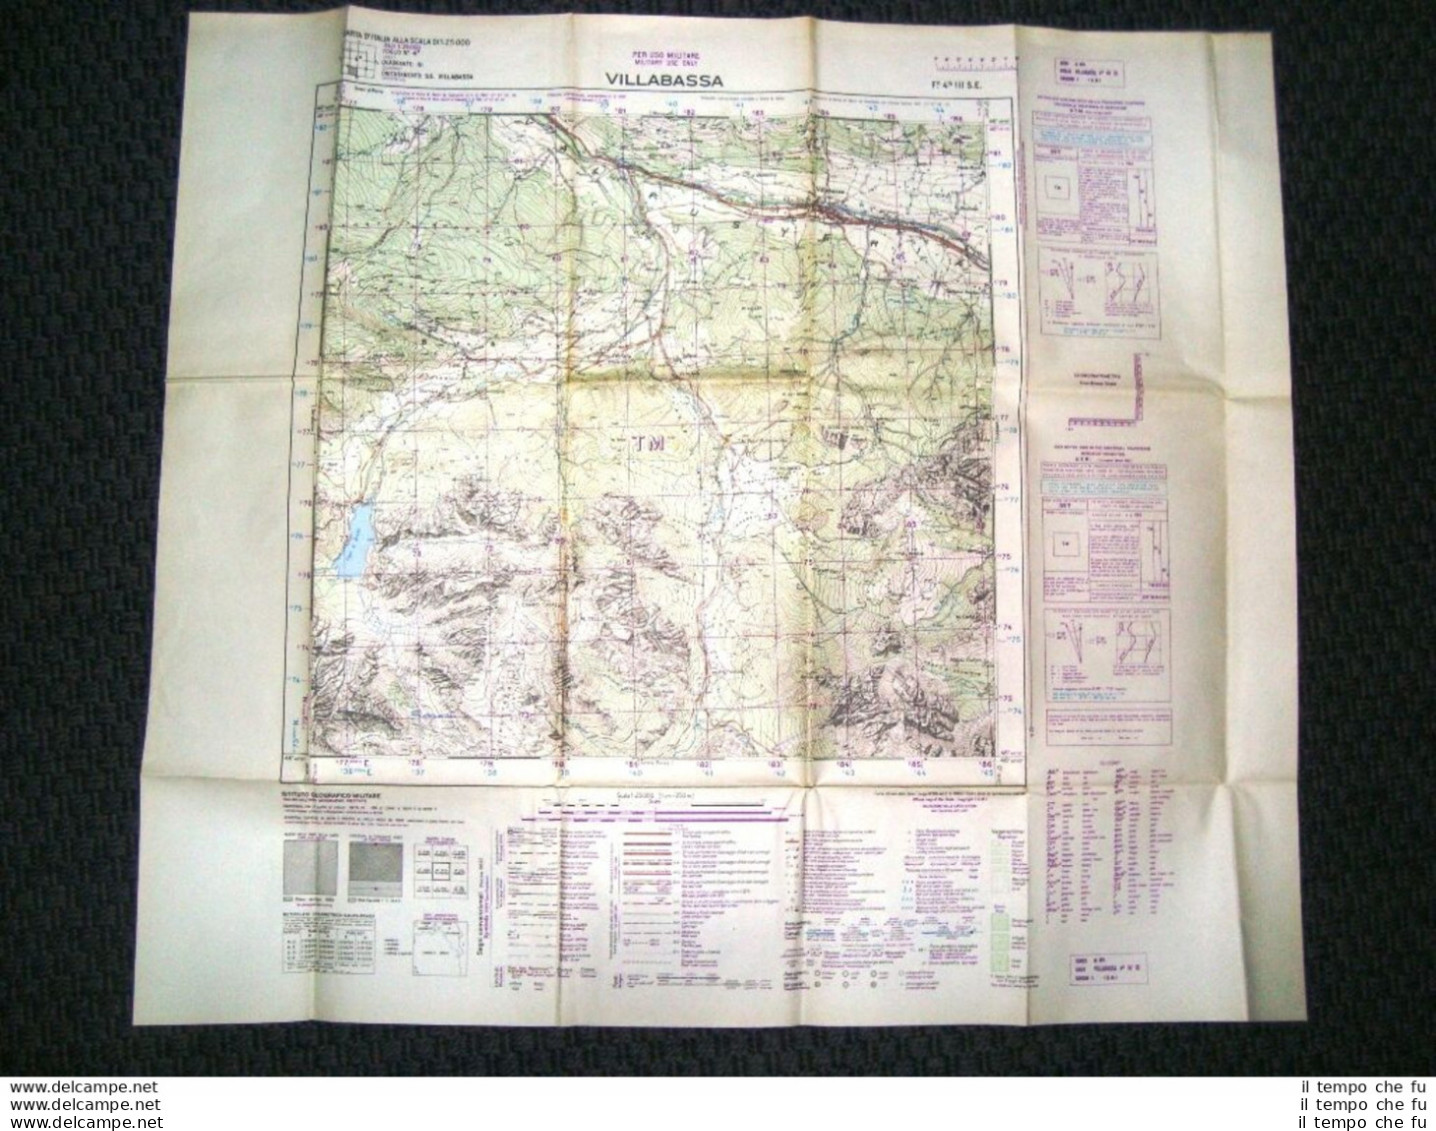 Grande Carta Topografica Villabassa Bolzano Trentino Dettagliatissima I.G.M. - Cartes Géographiques